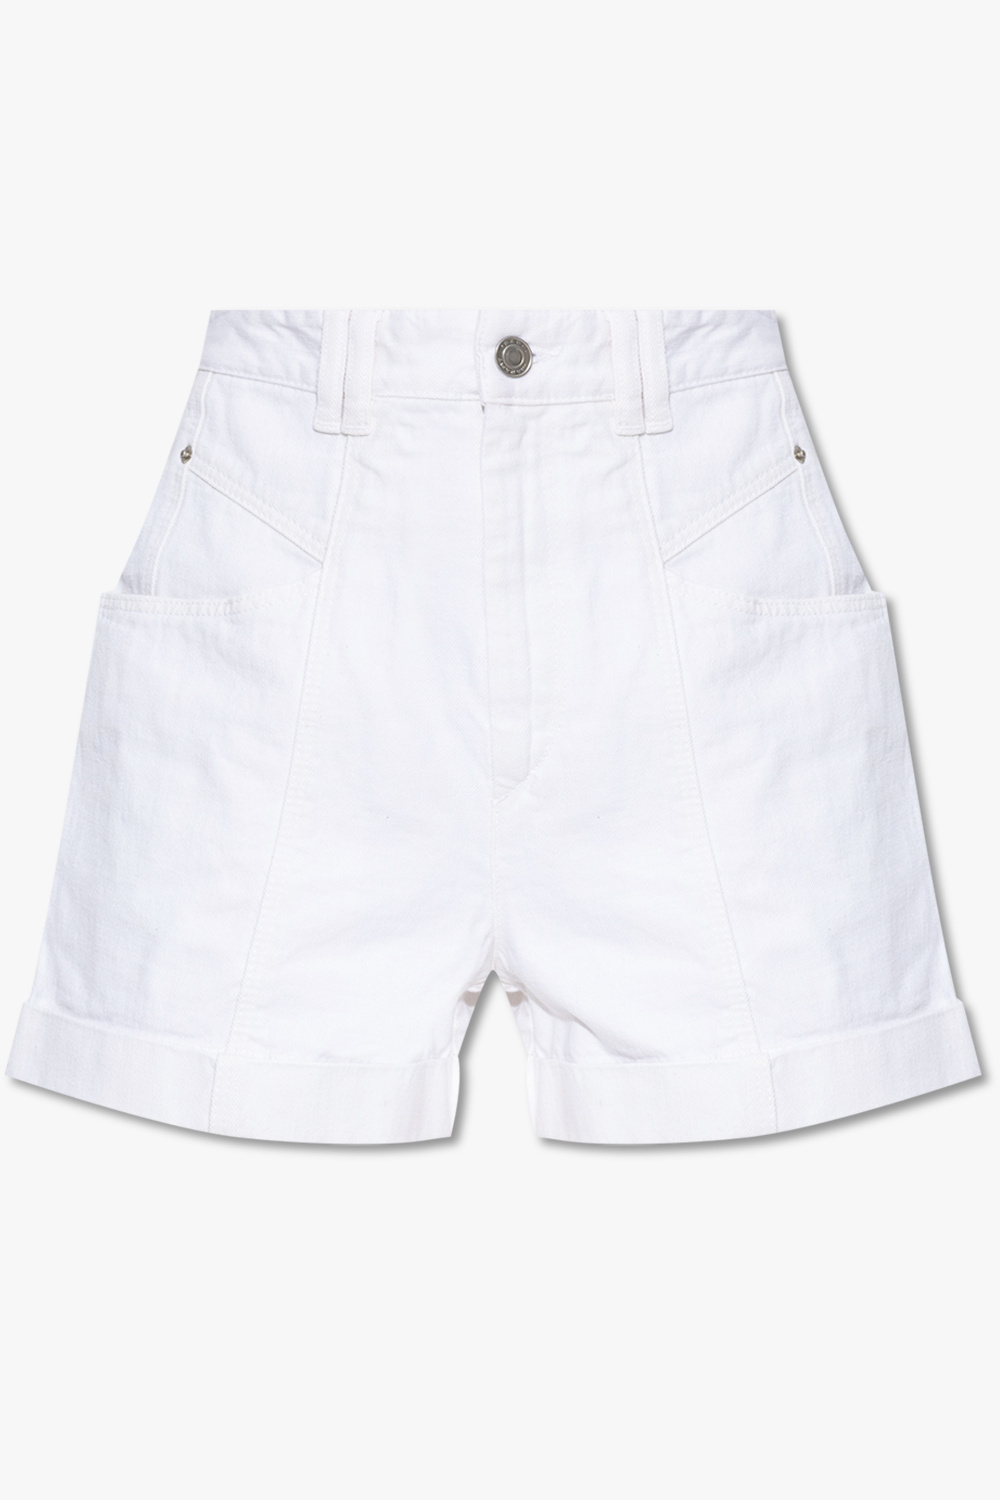 Isabel Marant ‘Vetanio’ high-waisted denim shorts